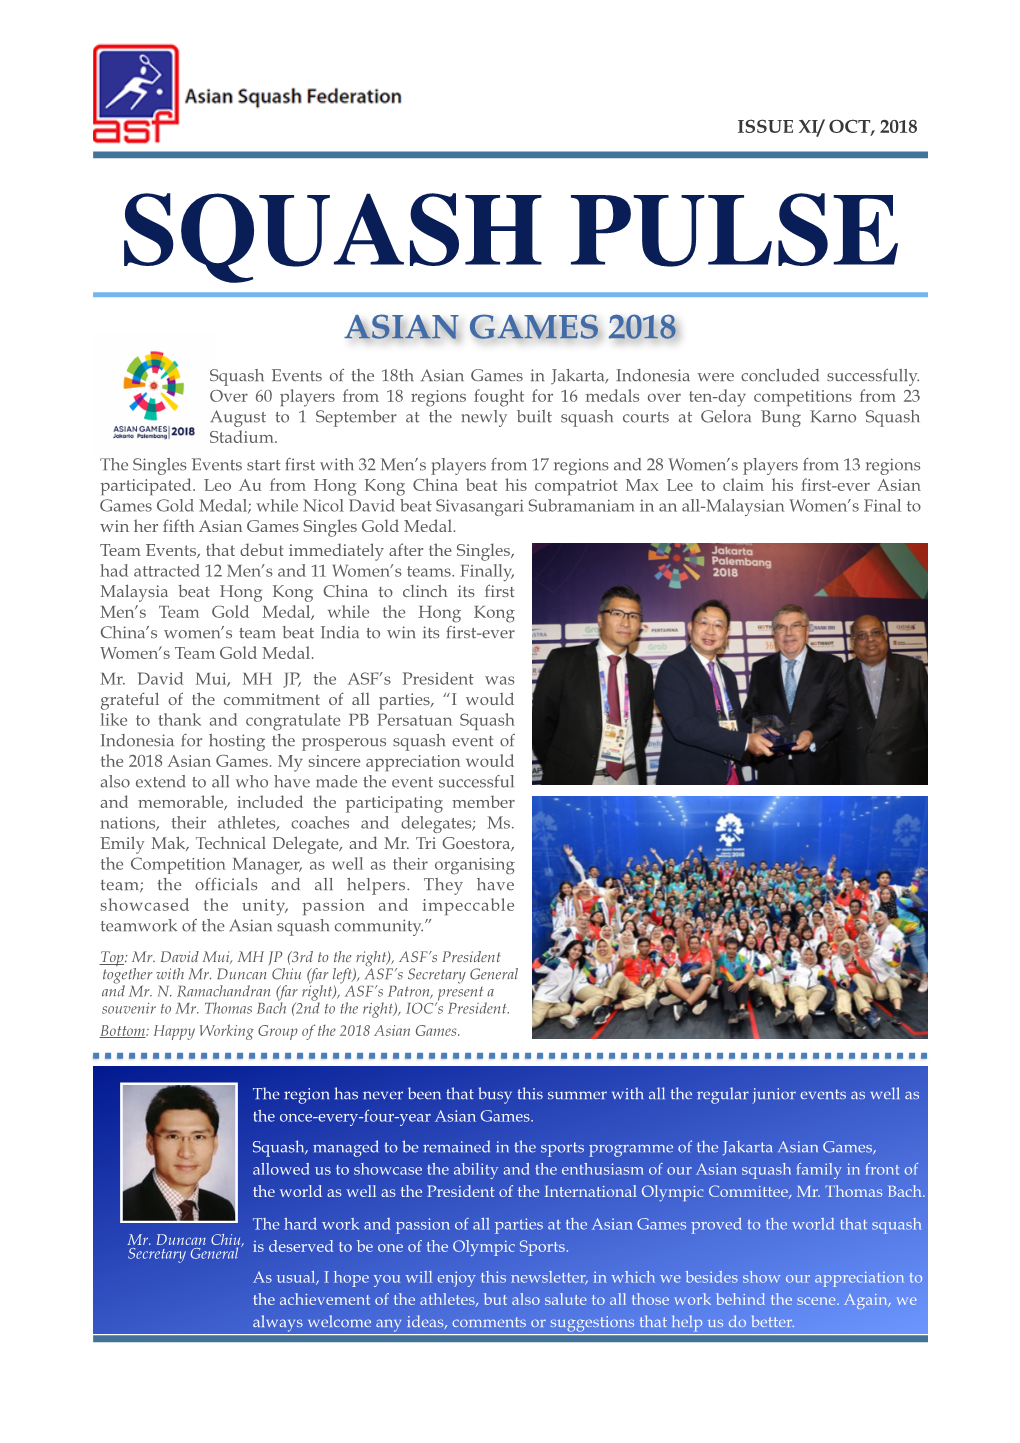 Squash Pulse ISSUE XI/ OCT, 2018 SQUASH PULSE ASIAN GAMES 2018